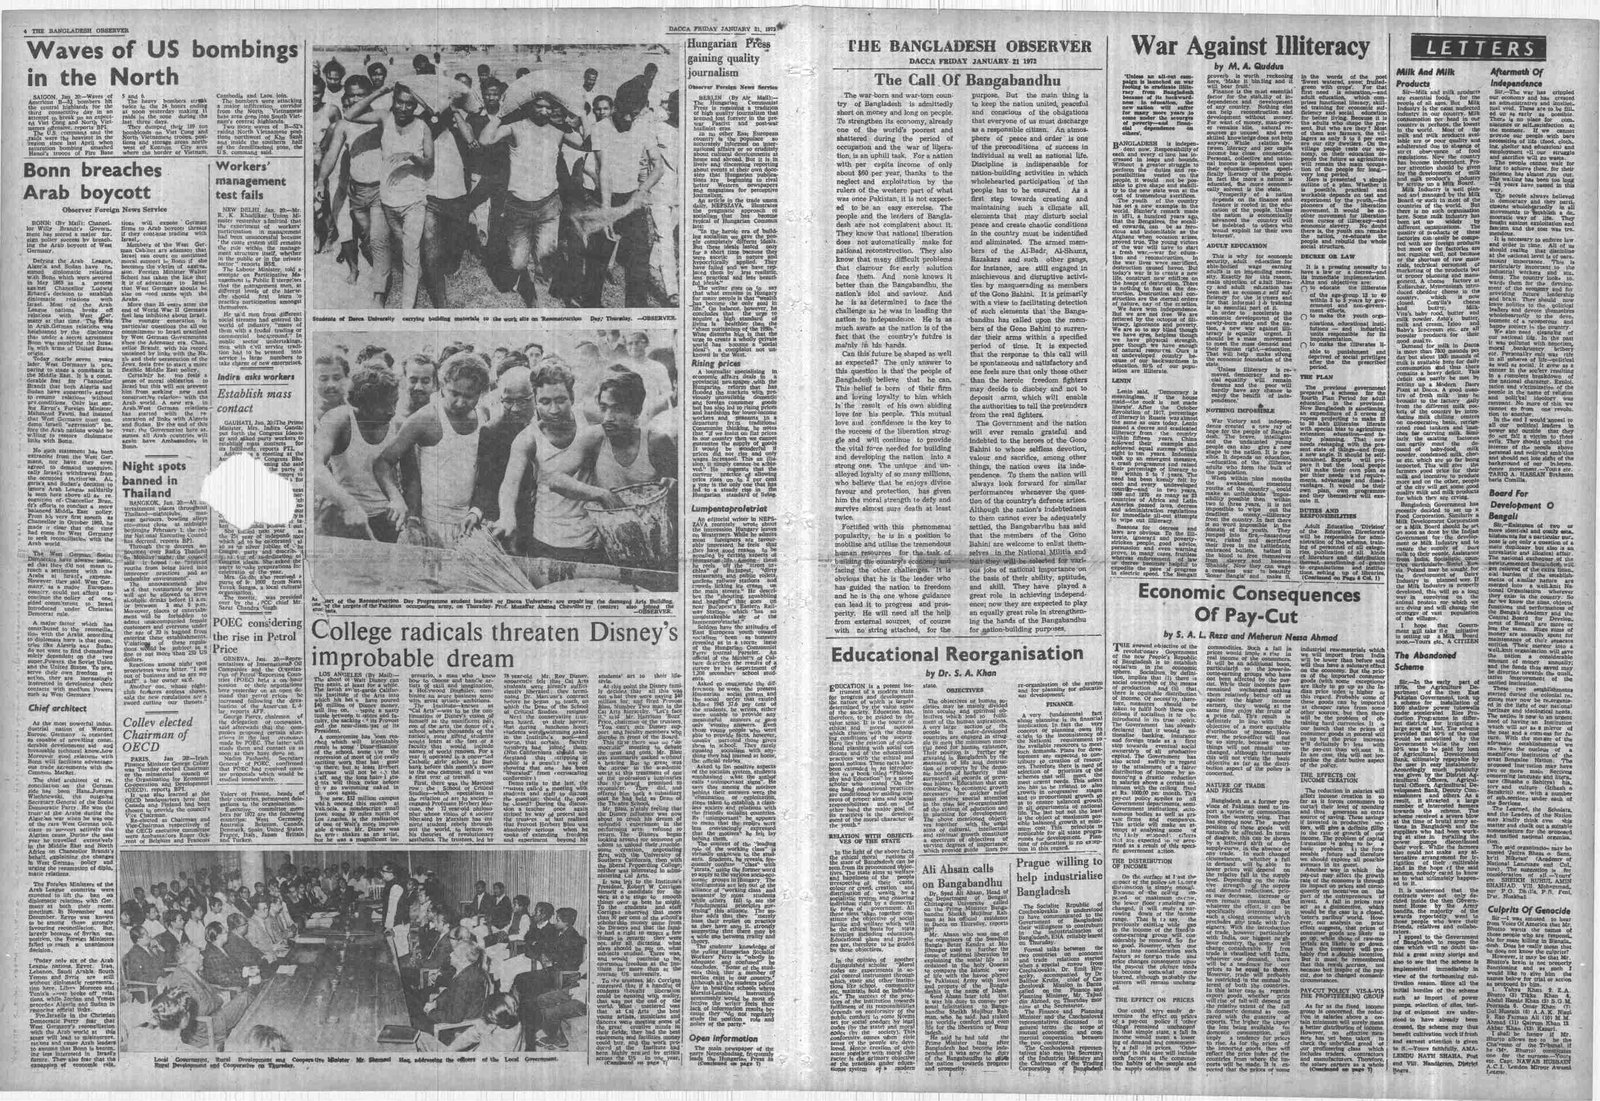 21JAN1972-Bangladesh Observer-Regular-Page 4 and 5